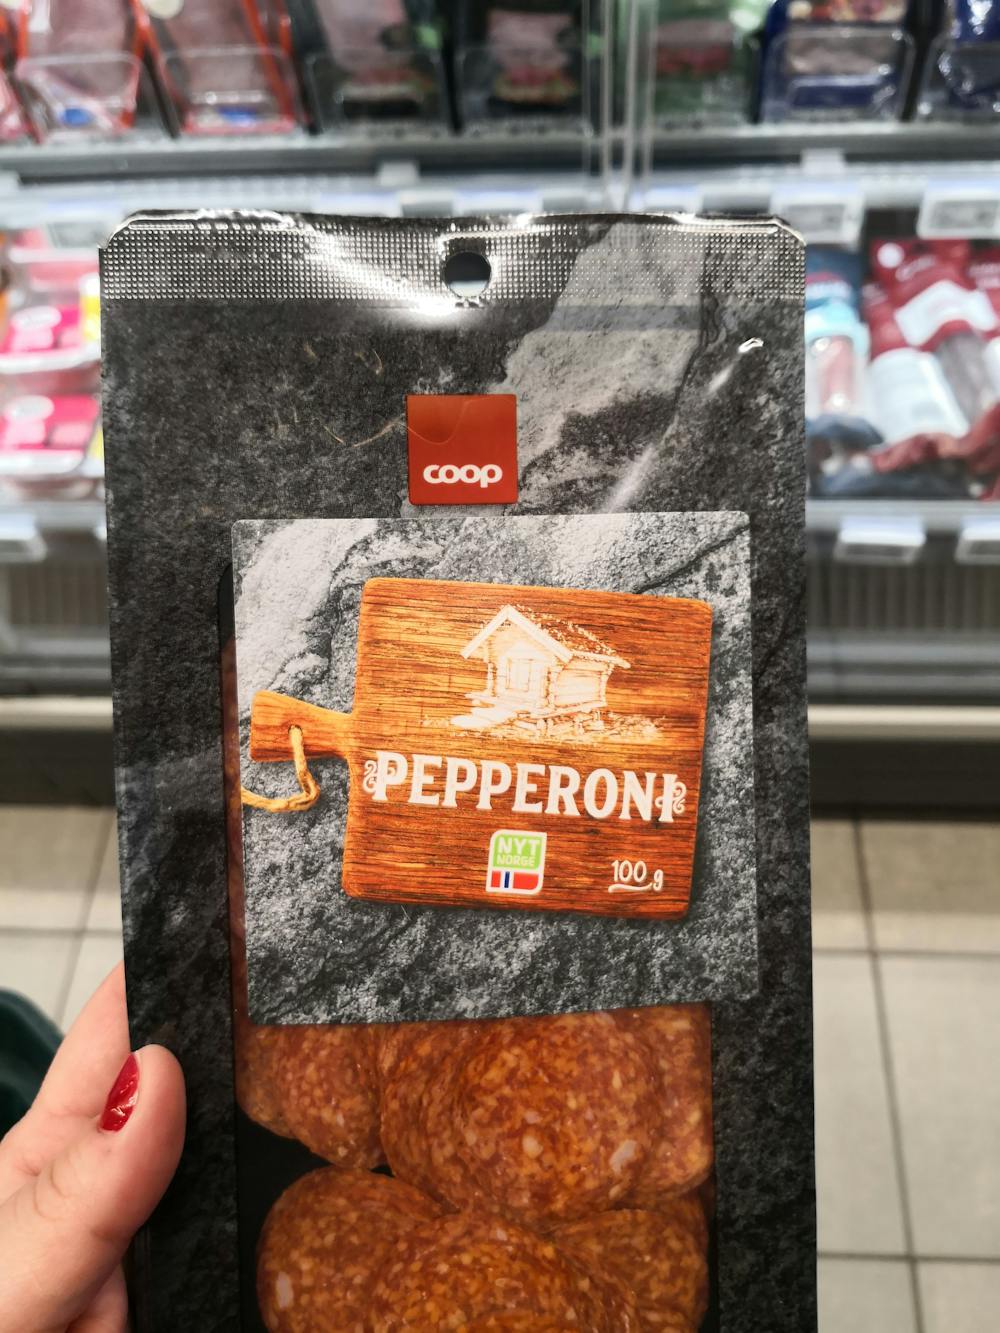 Pepperoni, Coop